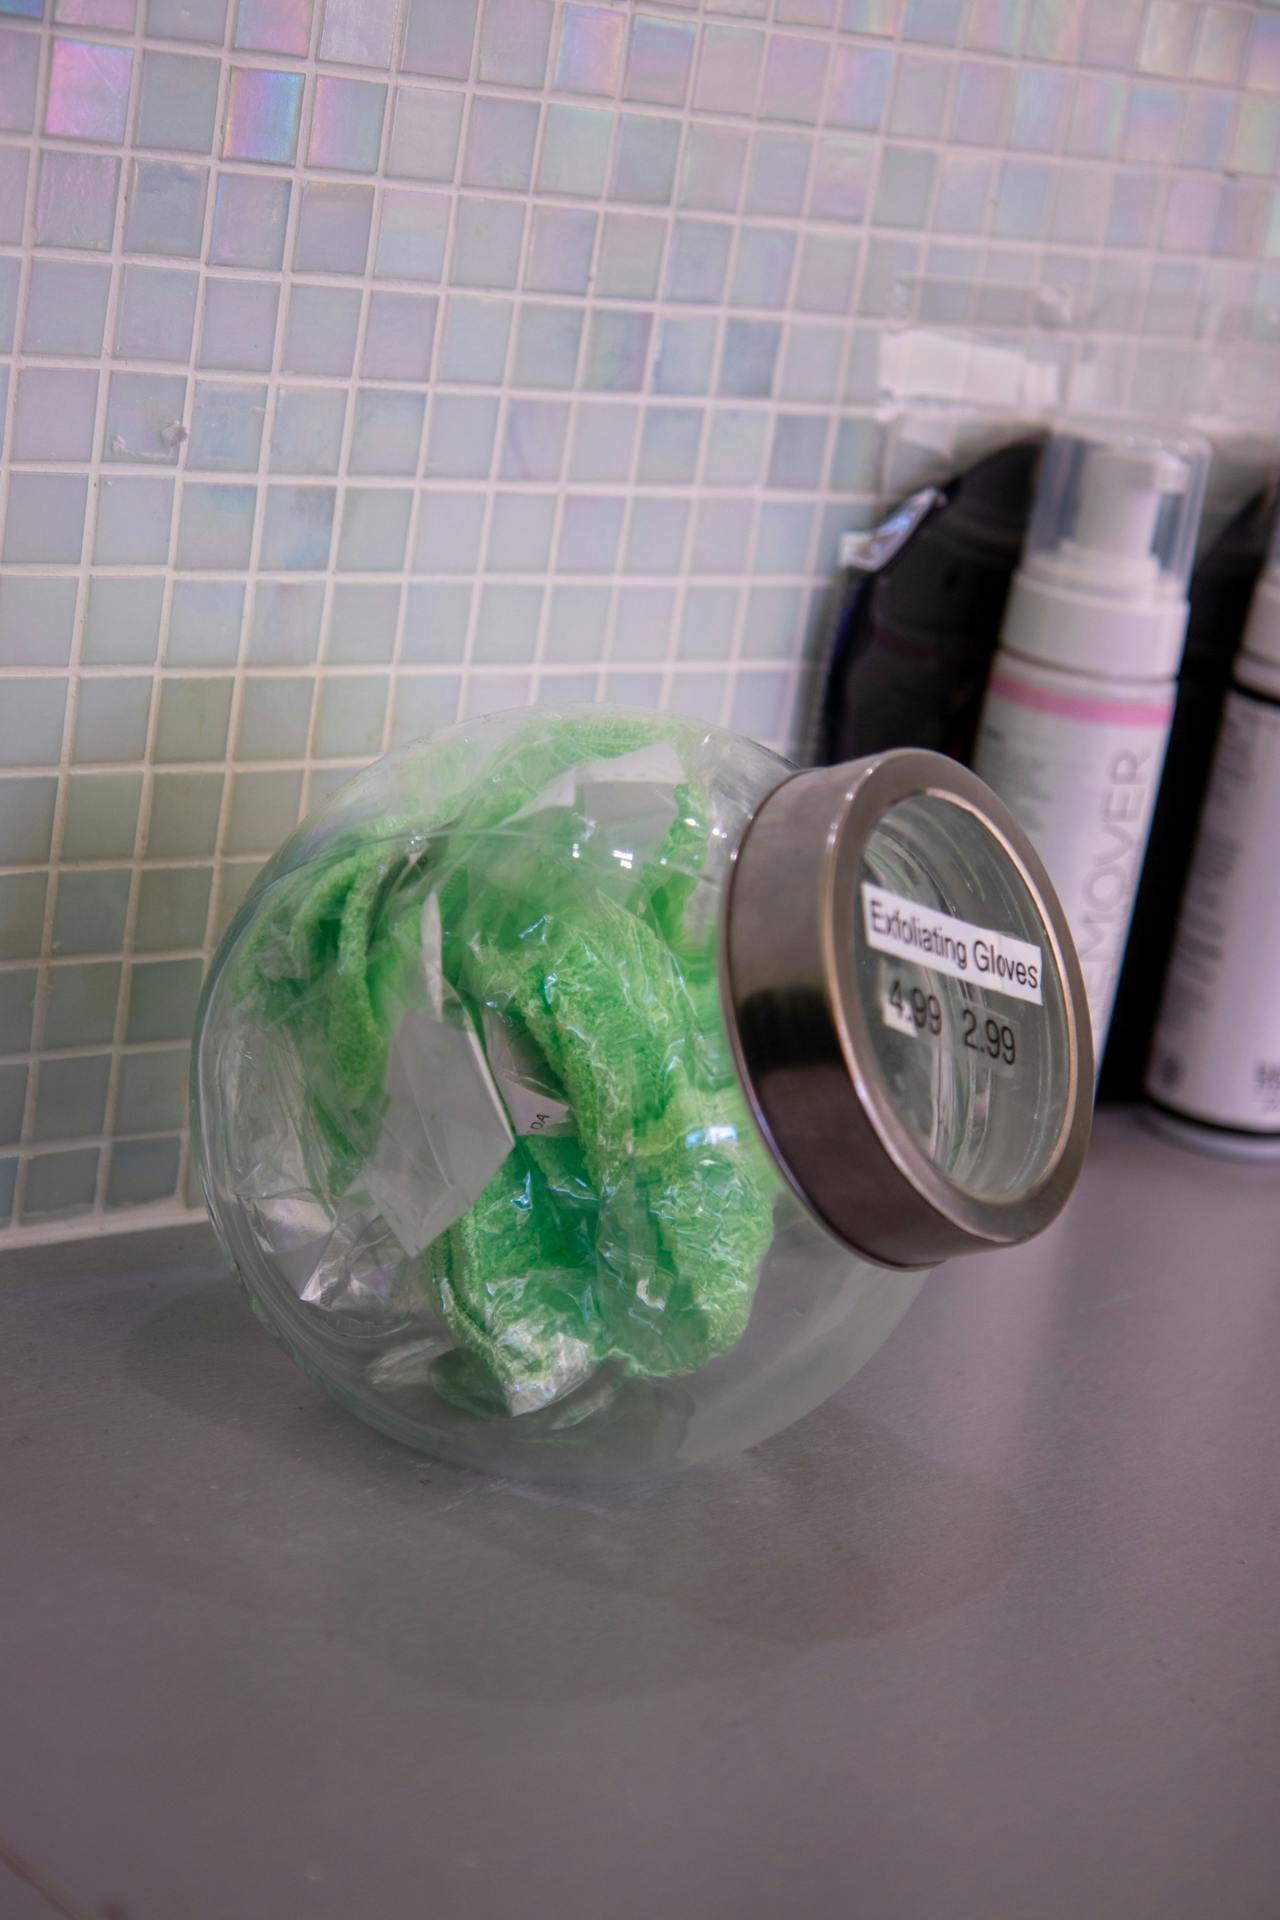 Green exfoliating gloves in a jar